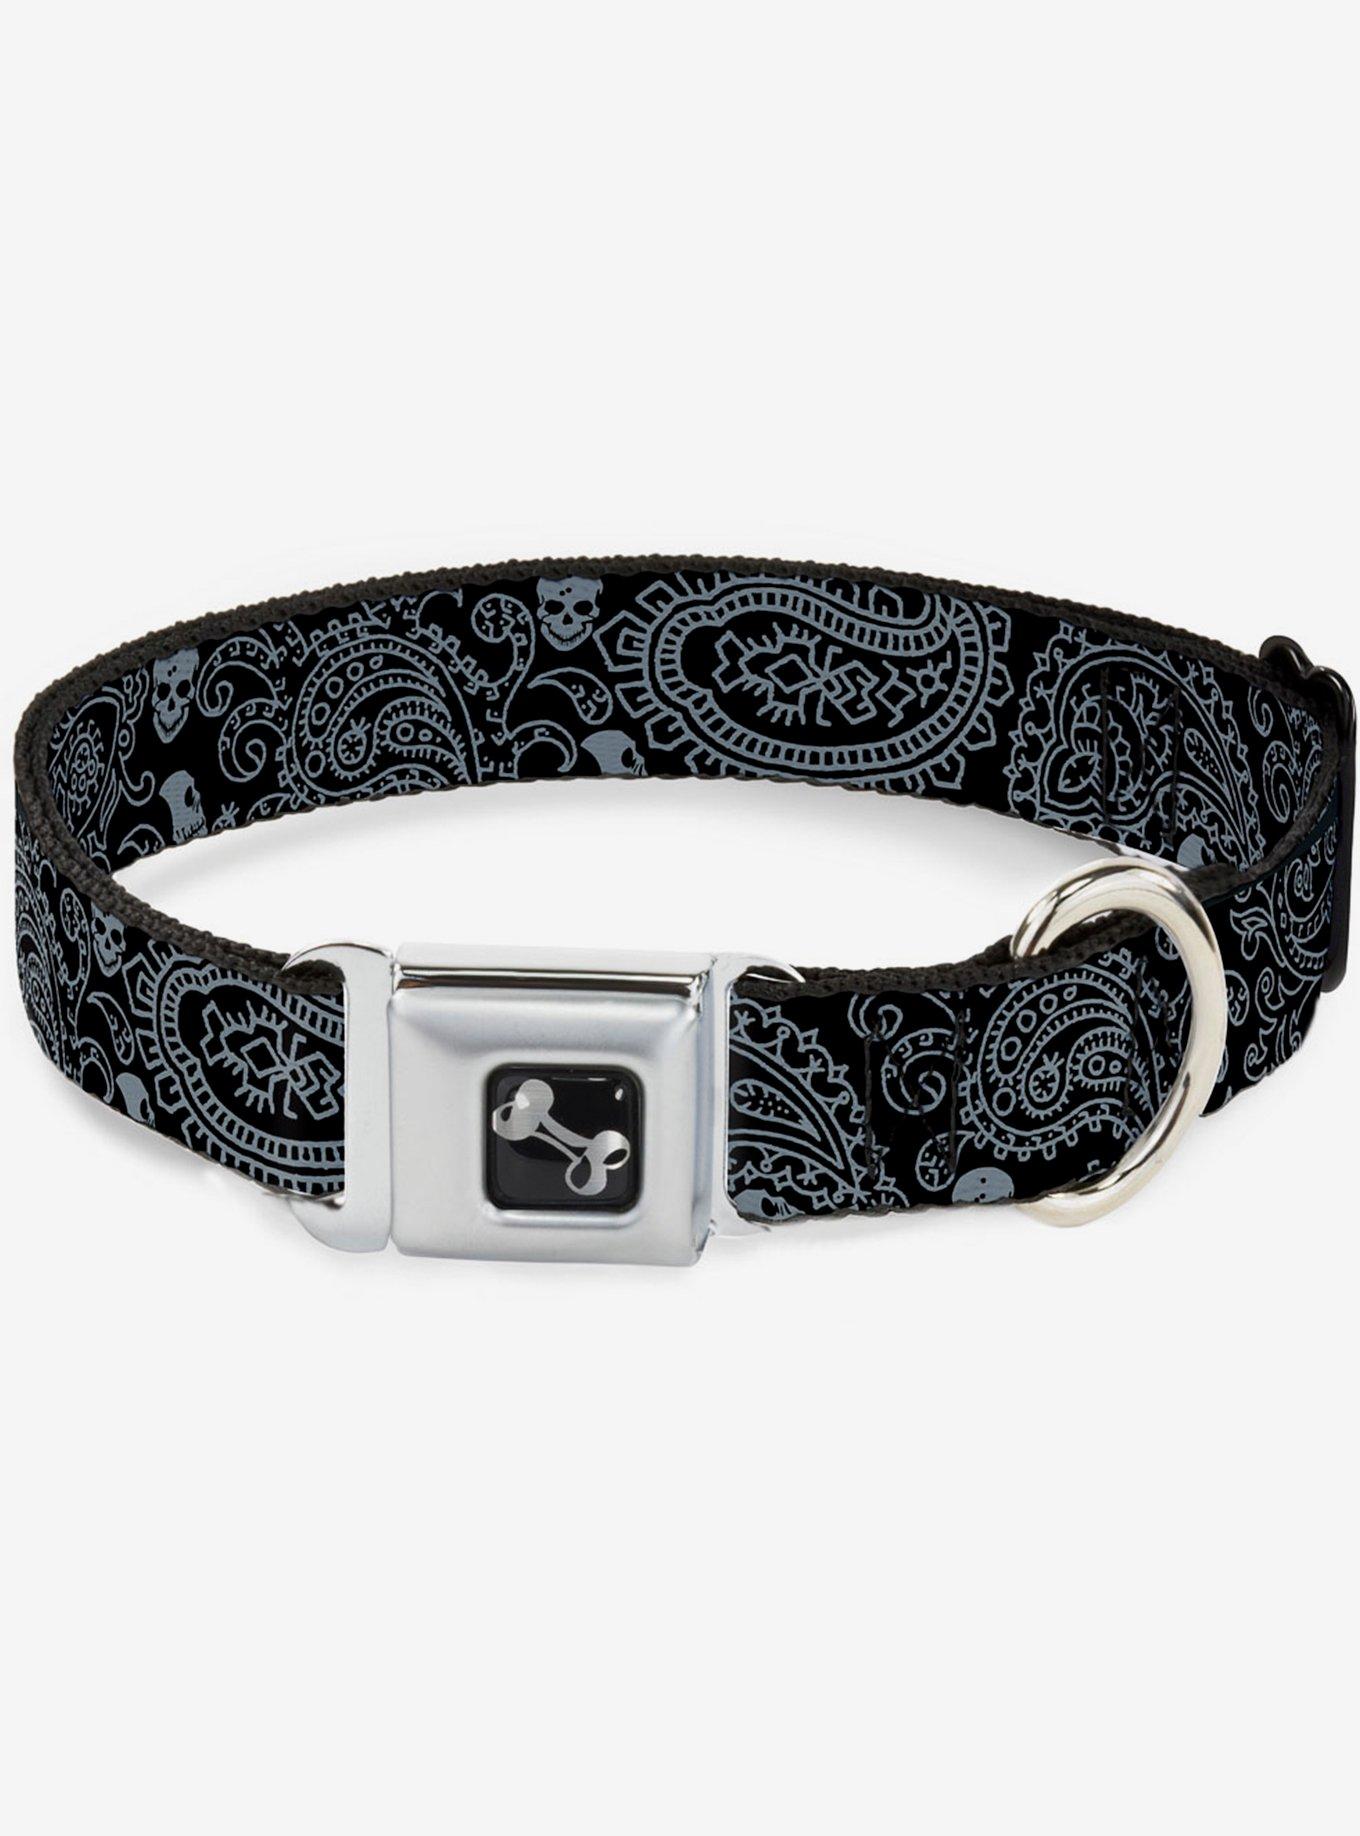 Bandana Skull Print Seatbelt Dog Collar Black Silver, SILVER, hi-res